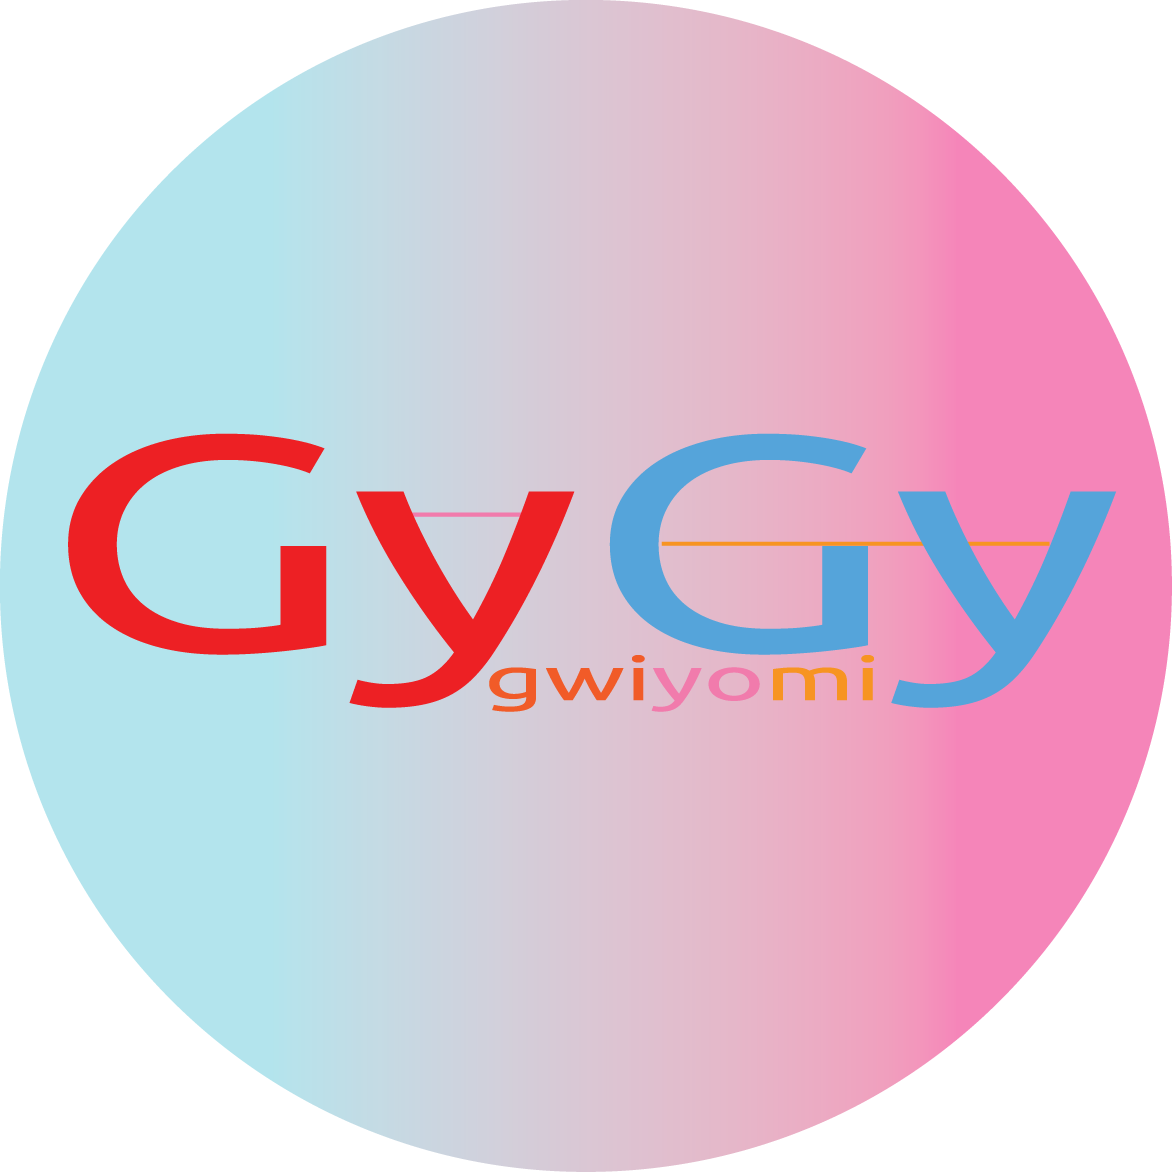 Gygy Gwiyomi Vitamin C